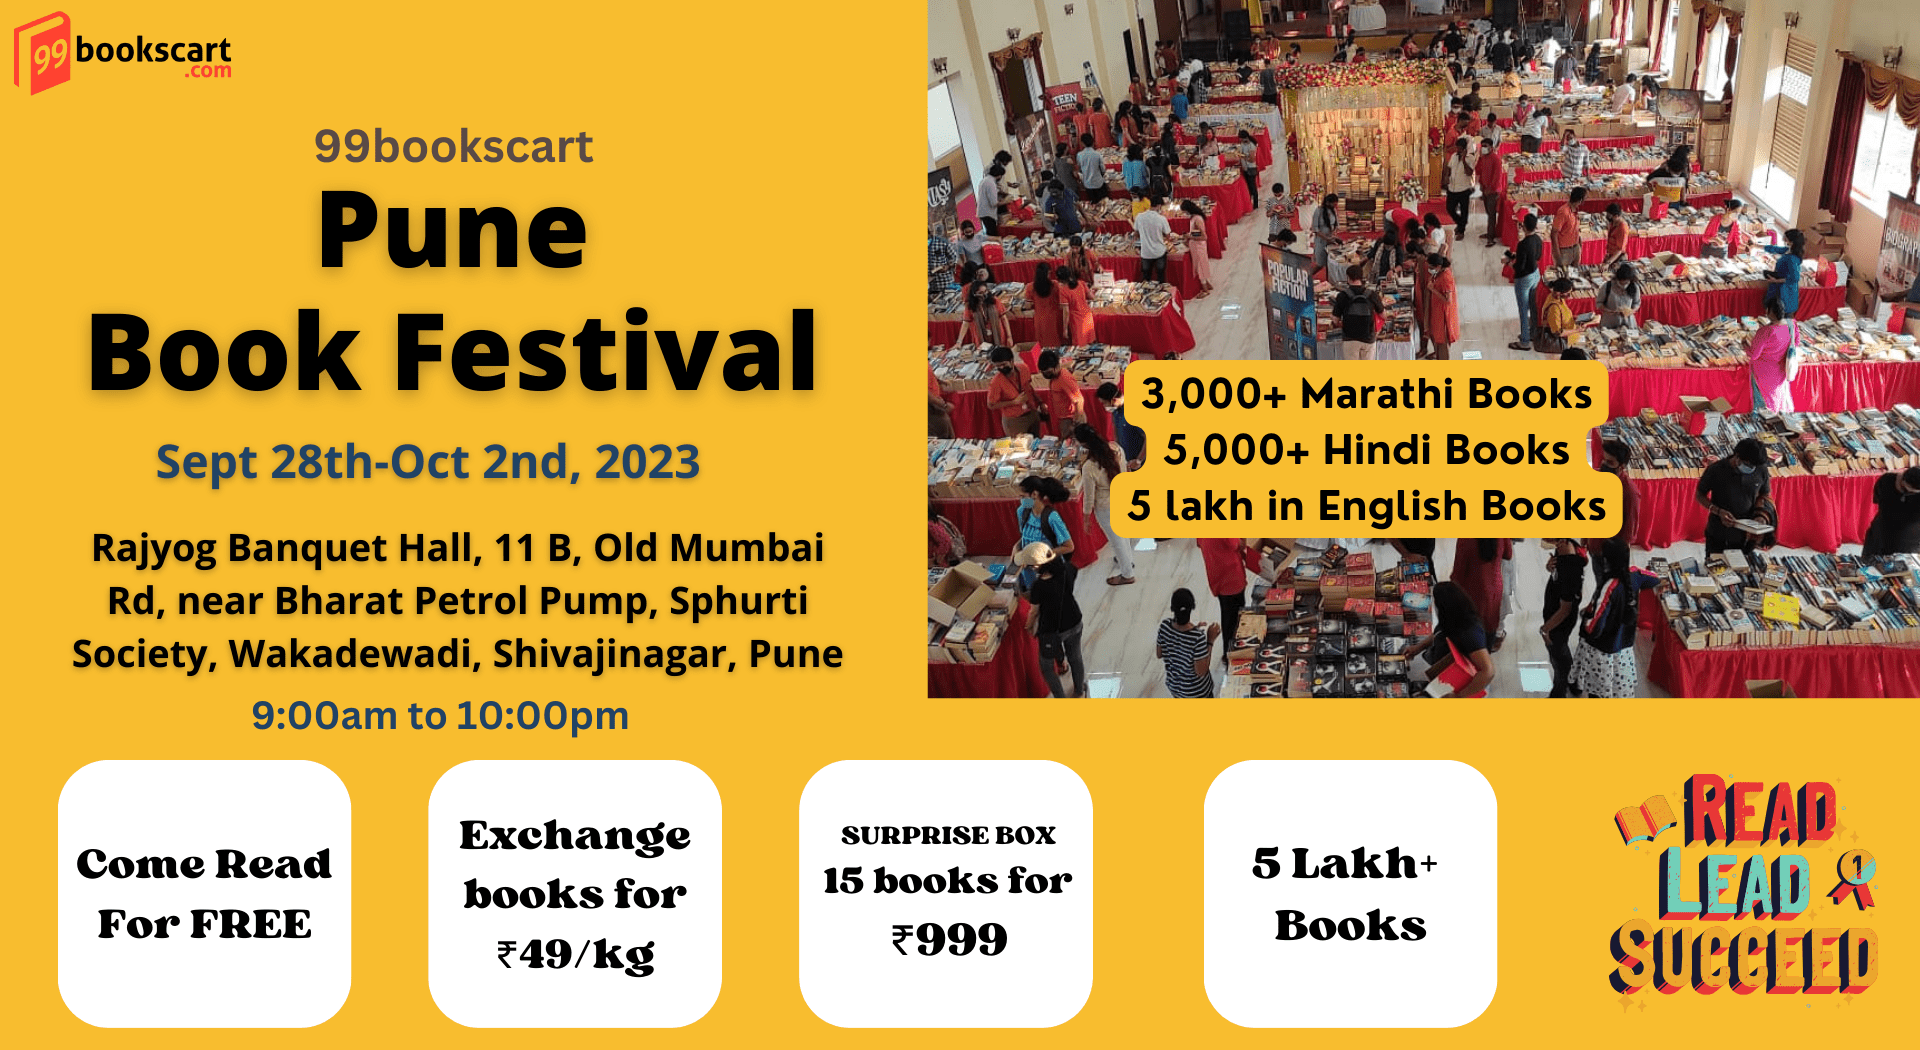 99bookscart Pune Book Festival